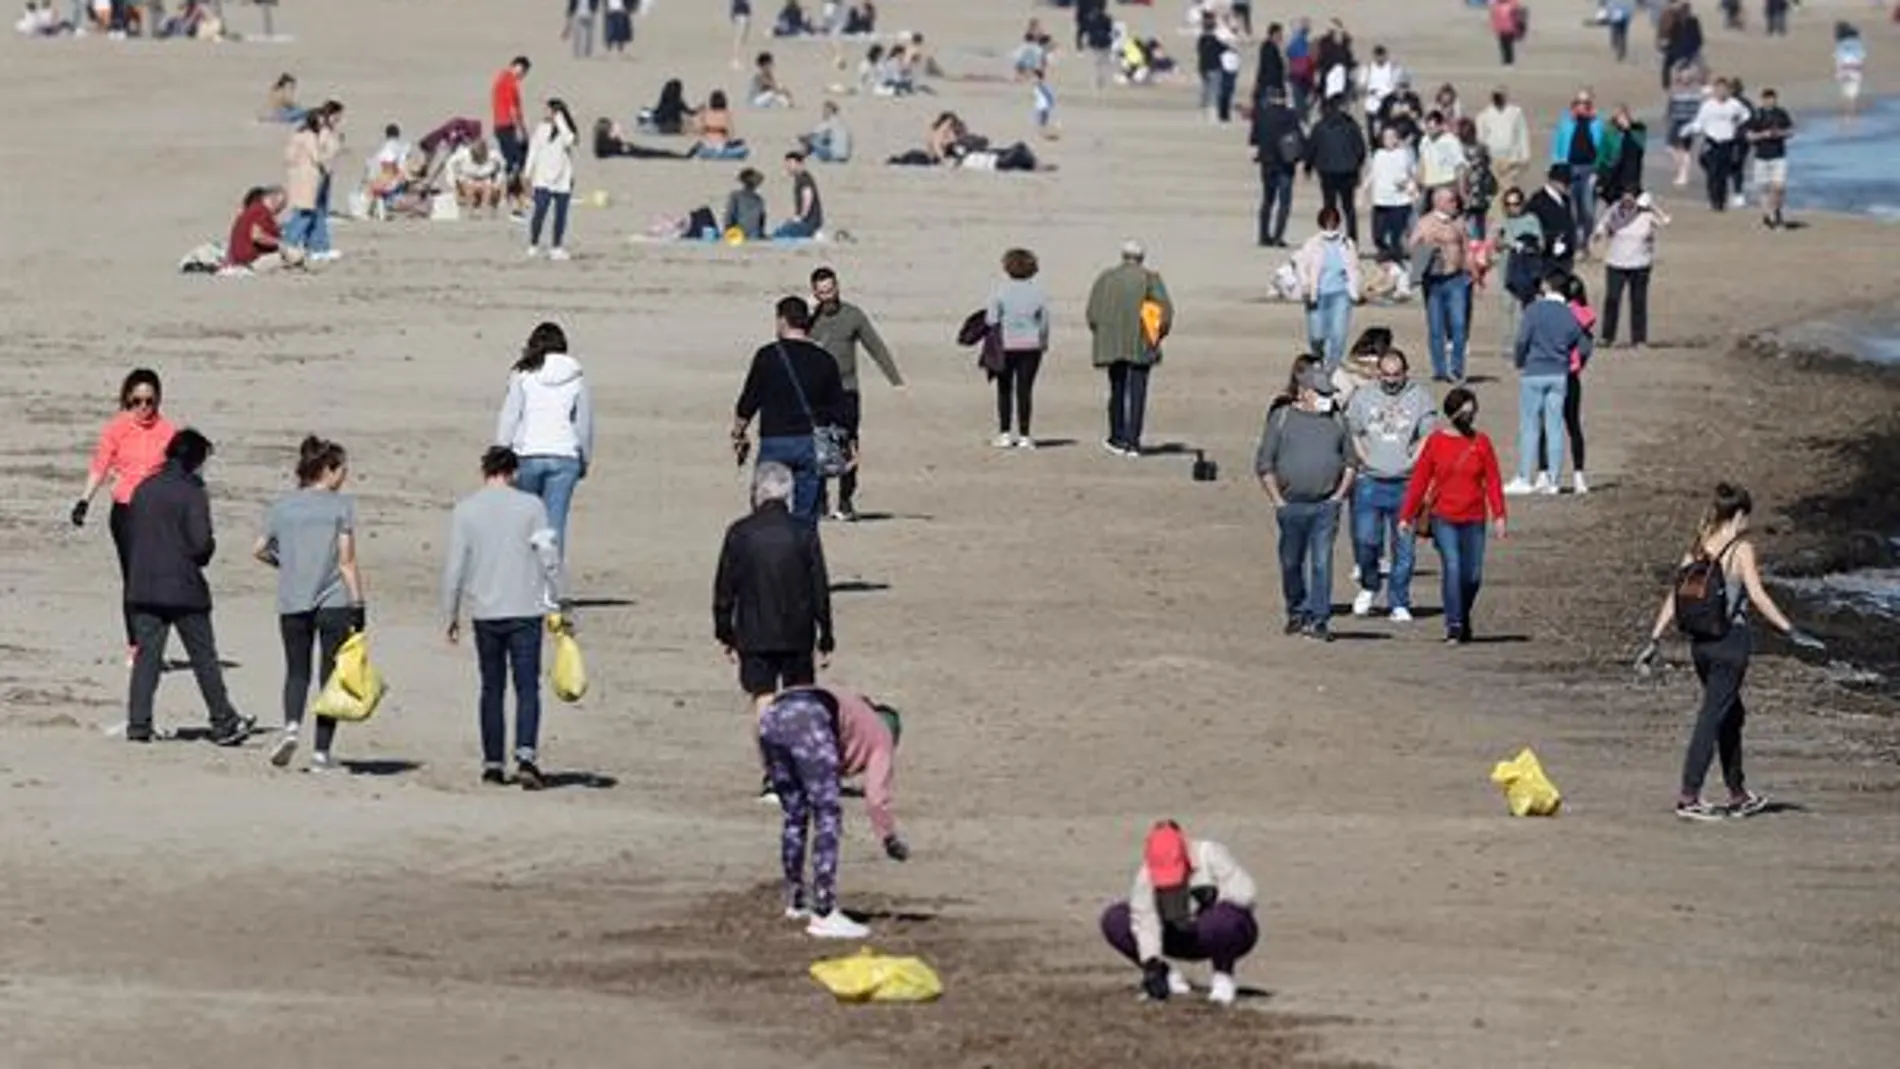 Gente paseando por la playa de la Malvarrosa